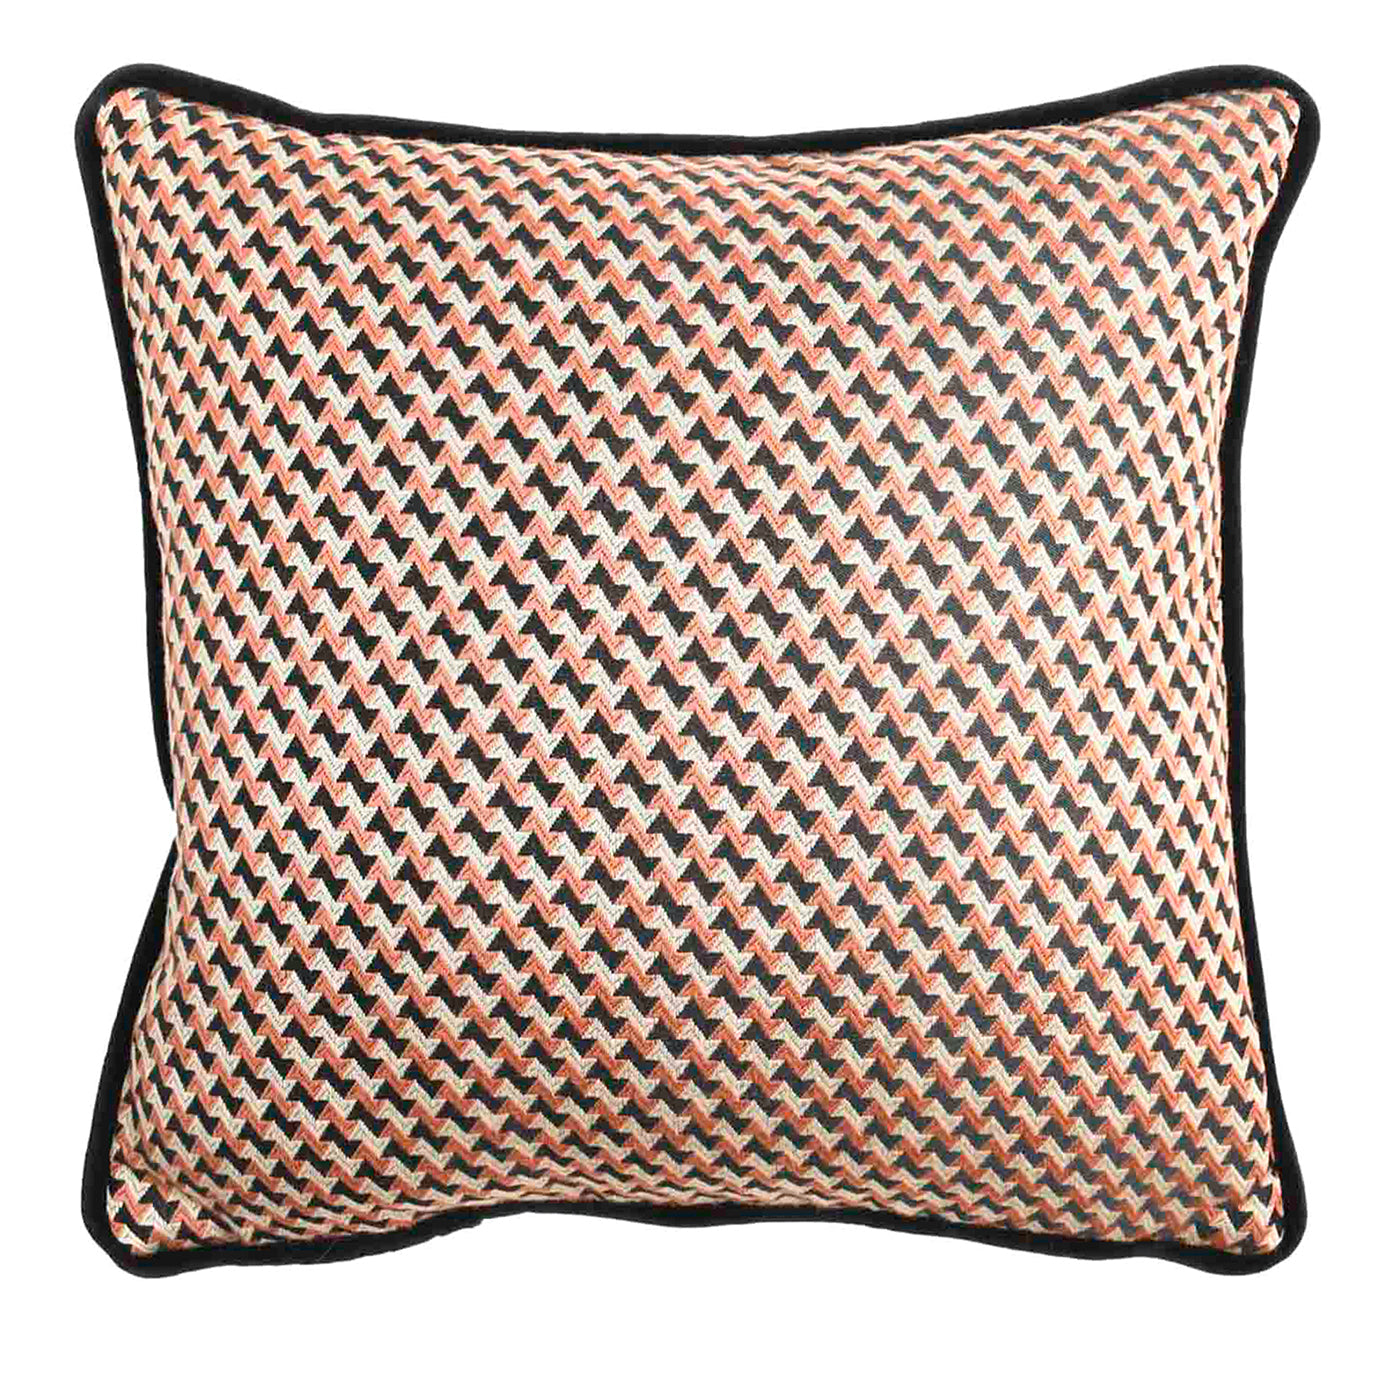 Carrè Cushion in Micro-Patterned jacquard fabric - Main view